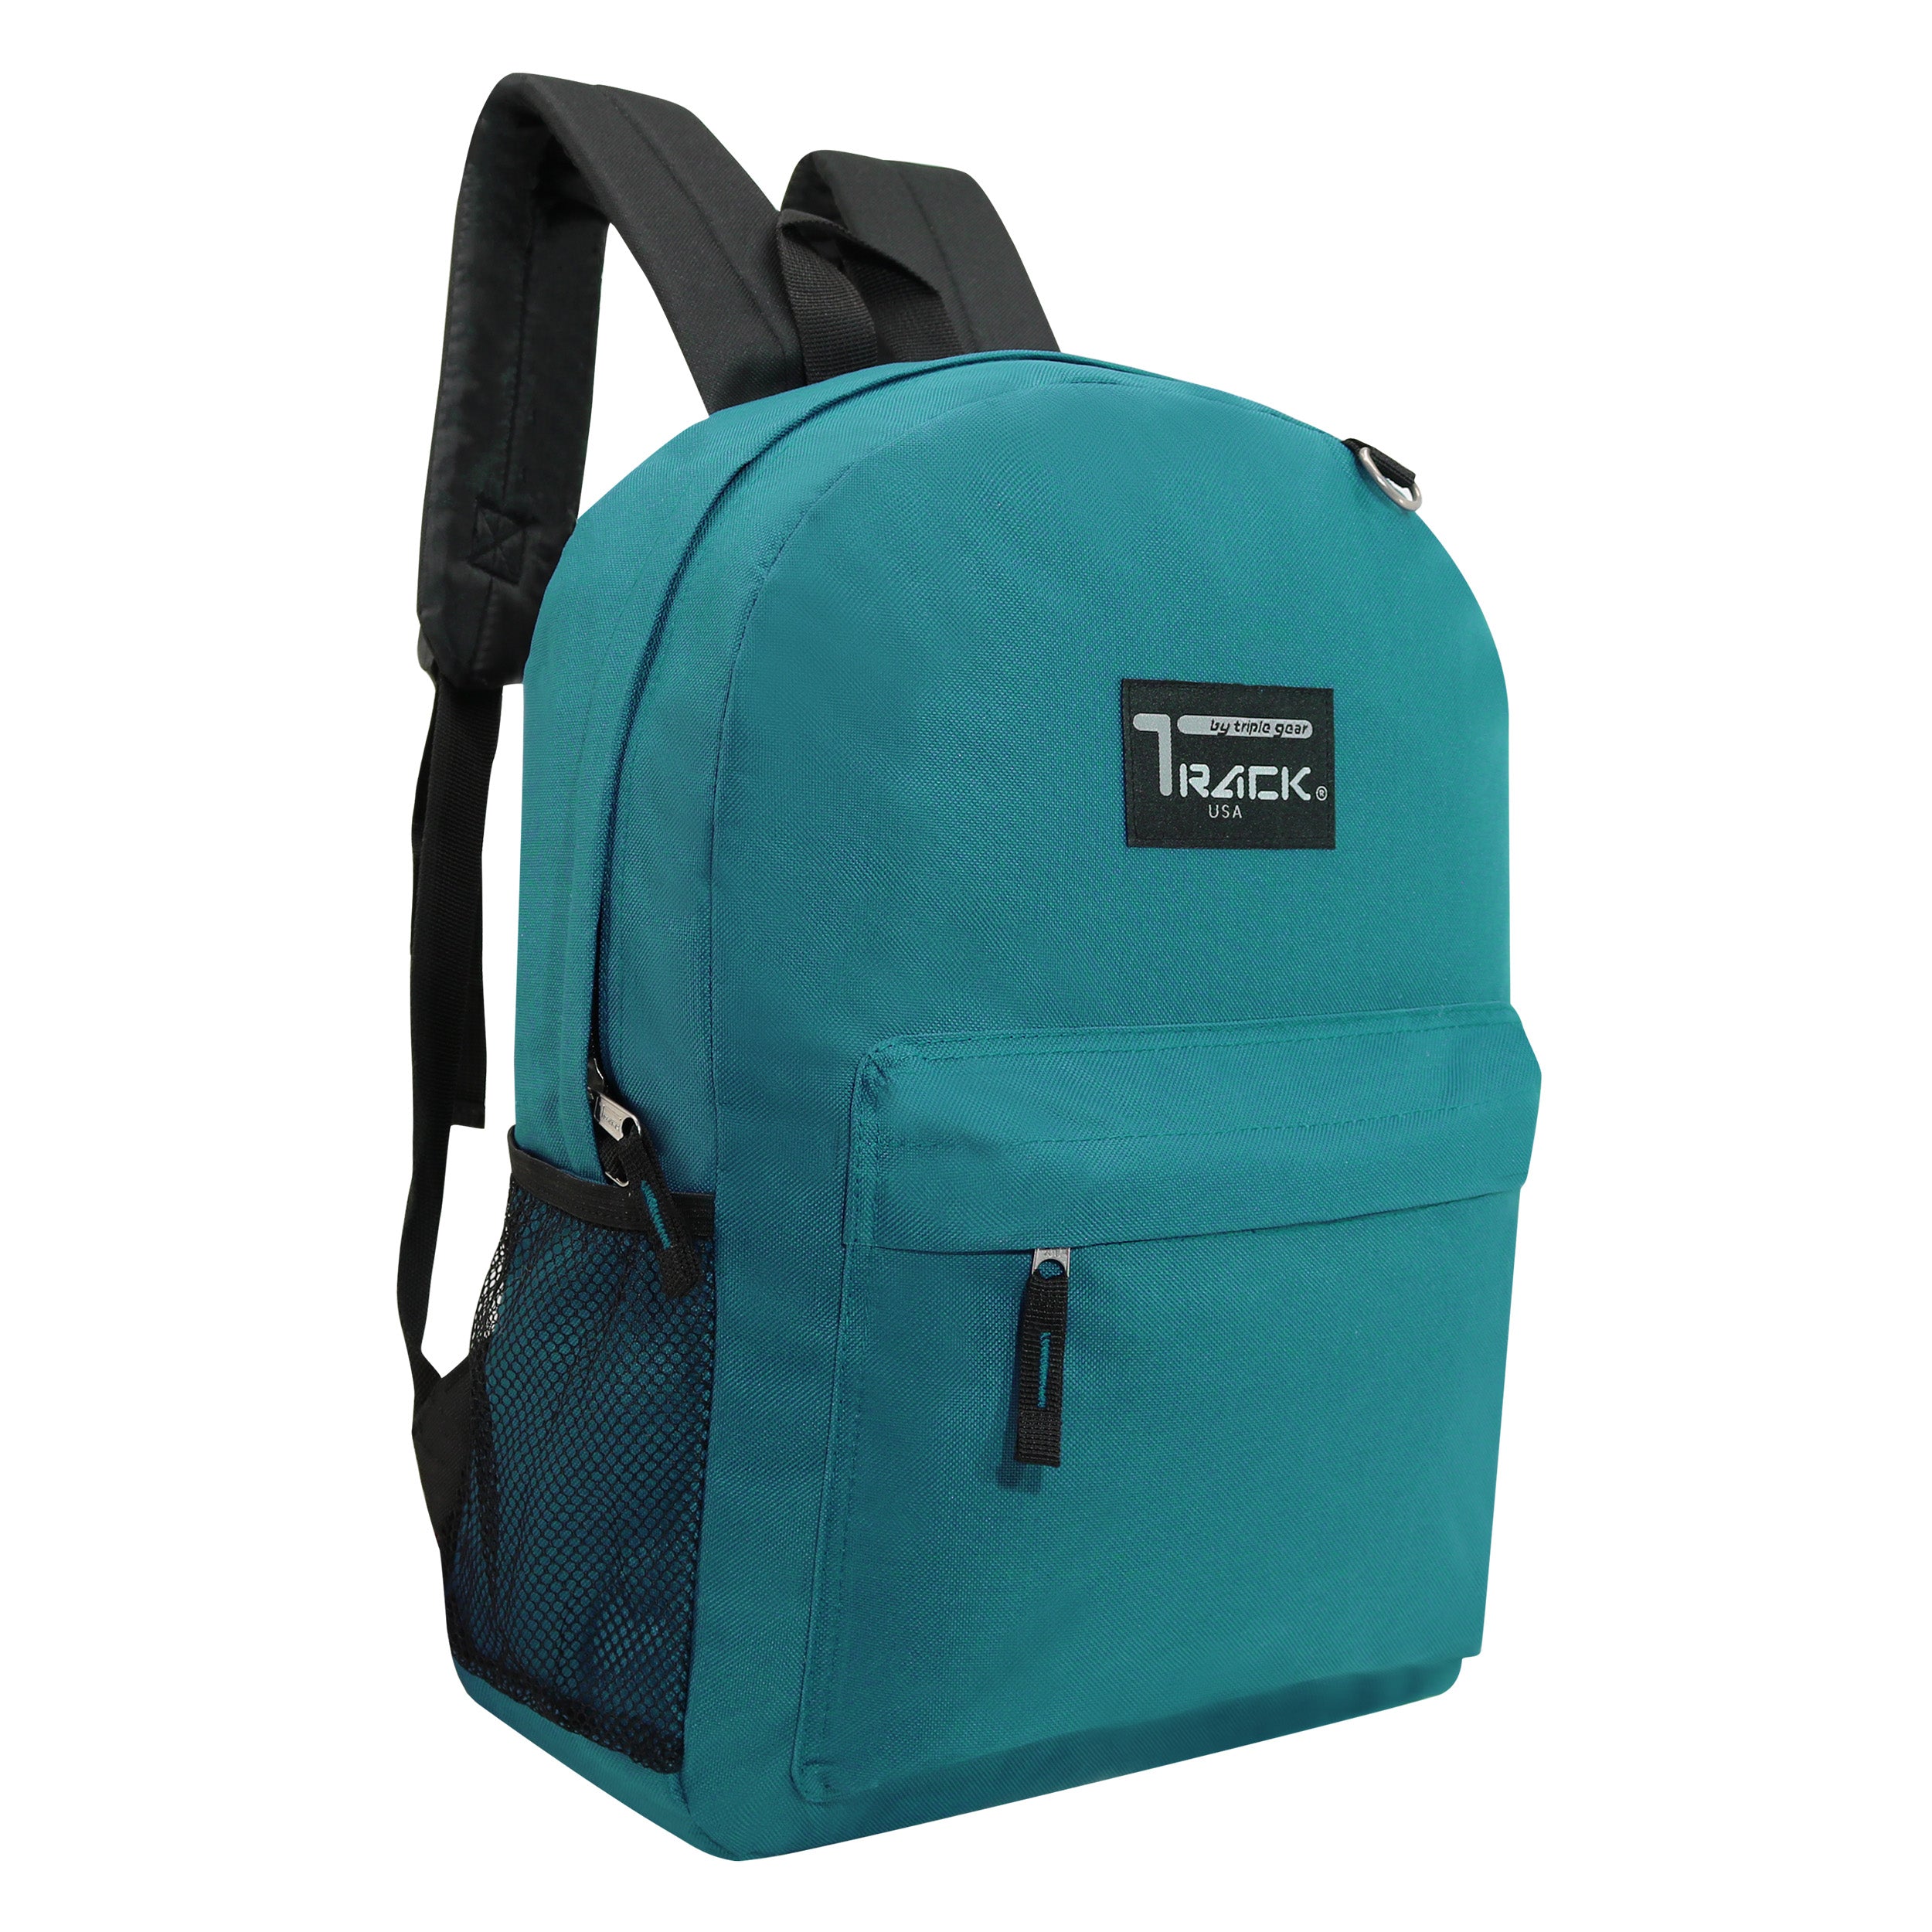 17" Bulk Classic Teal Backpack - Wholesale Case of 24 Bookbags